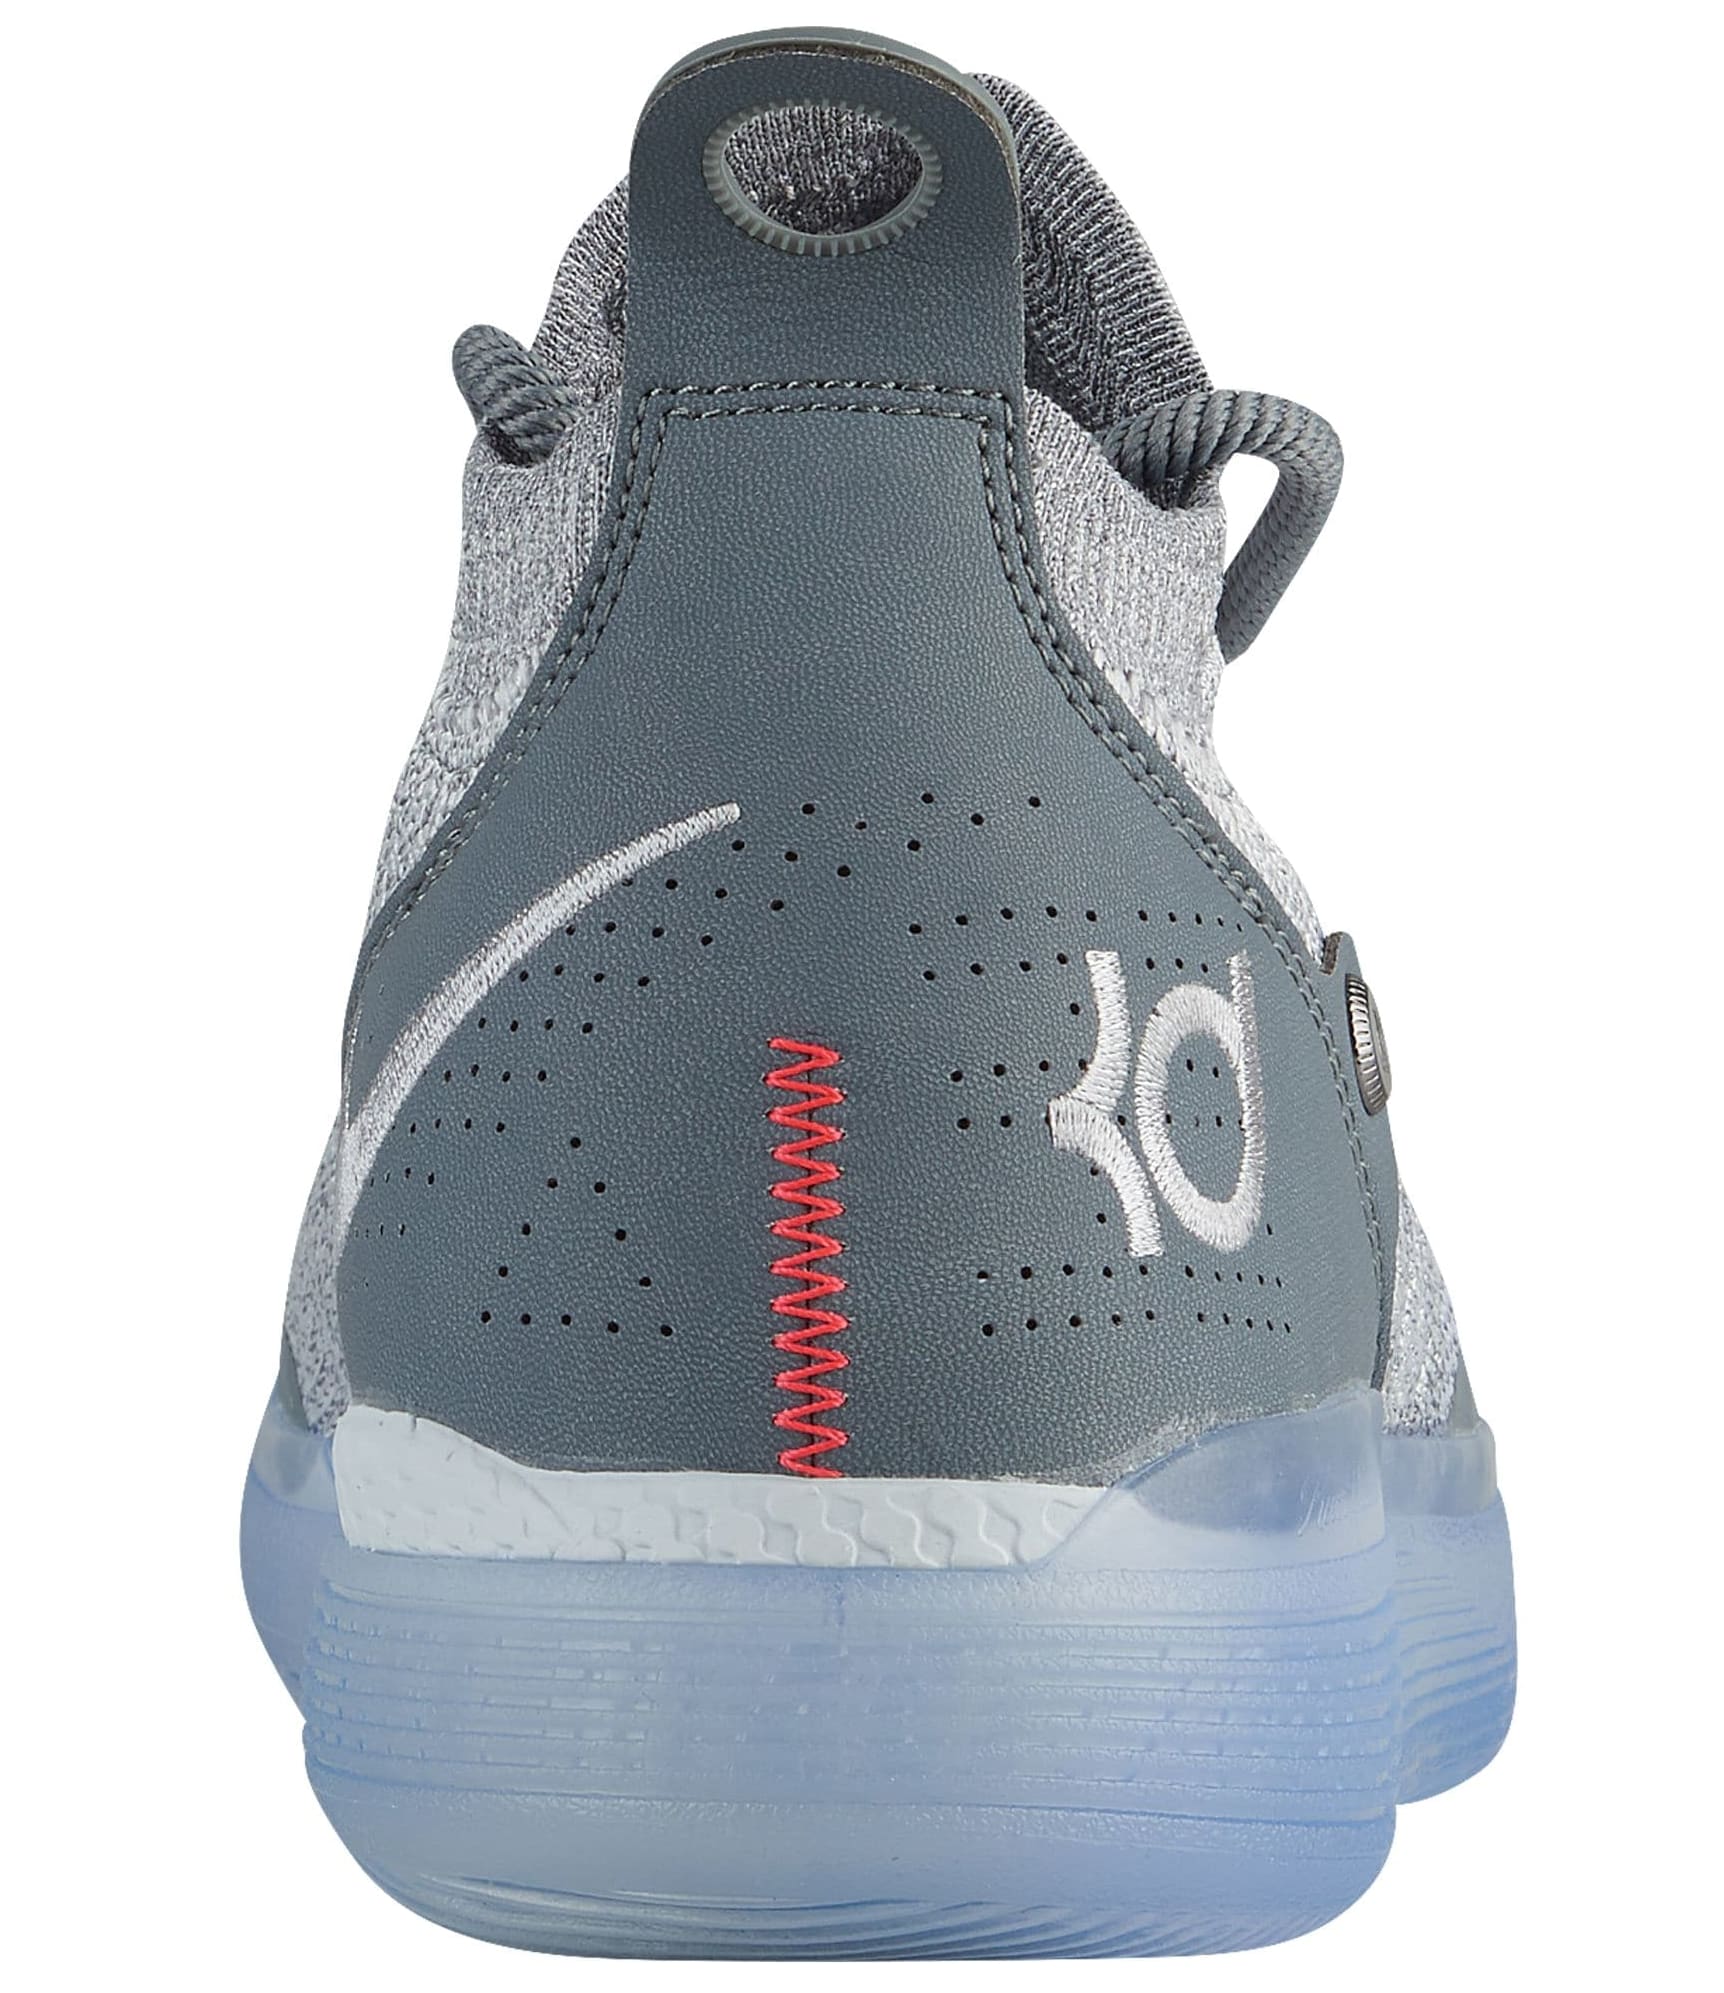 Red Deals Online Retail Store - Nike KD 11 Cool Grey Kevin Durant Wolf Grey  Men's Size 12 AO2604-002  #sellers  #nikekd11coolgrey #sneakerheads #sneakerheadatl #sneakerdaily  #sneakerfreaker #kicksoftheday #reddealsonline #shop